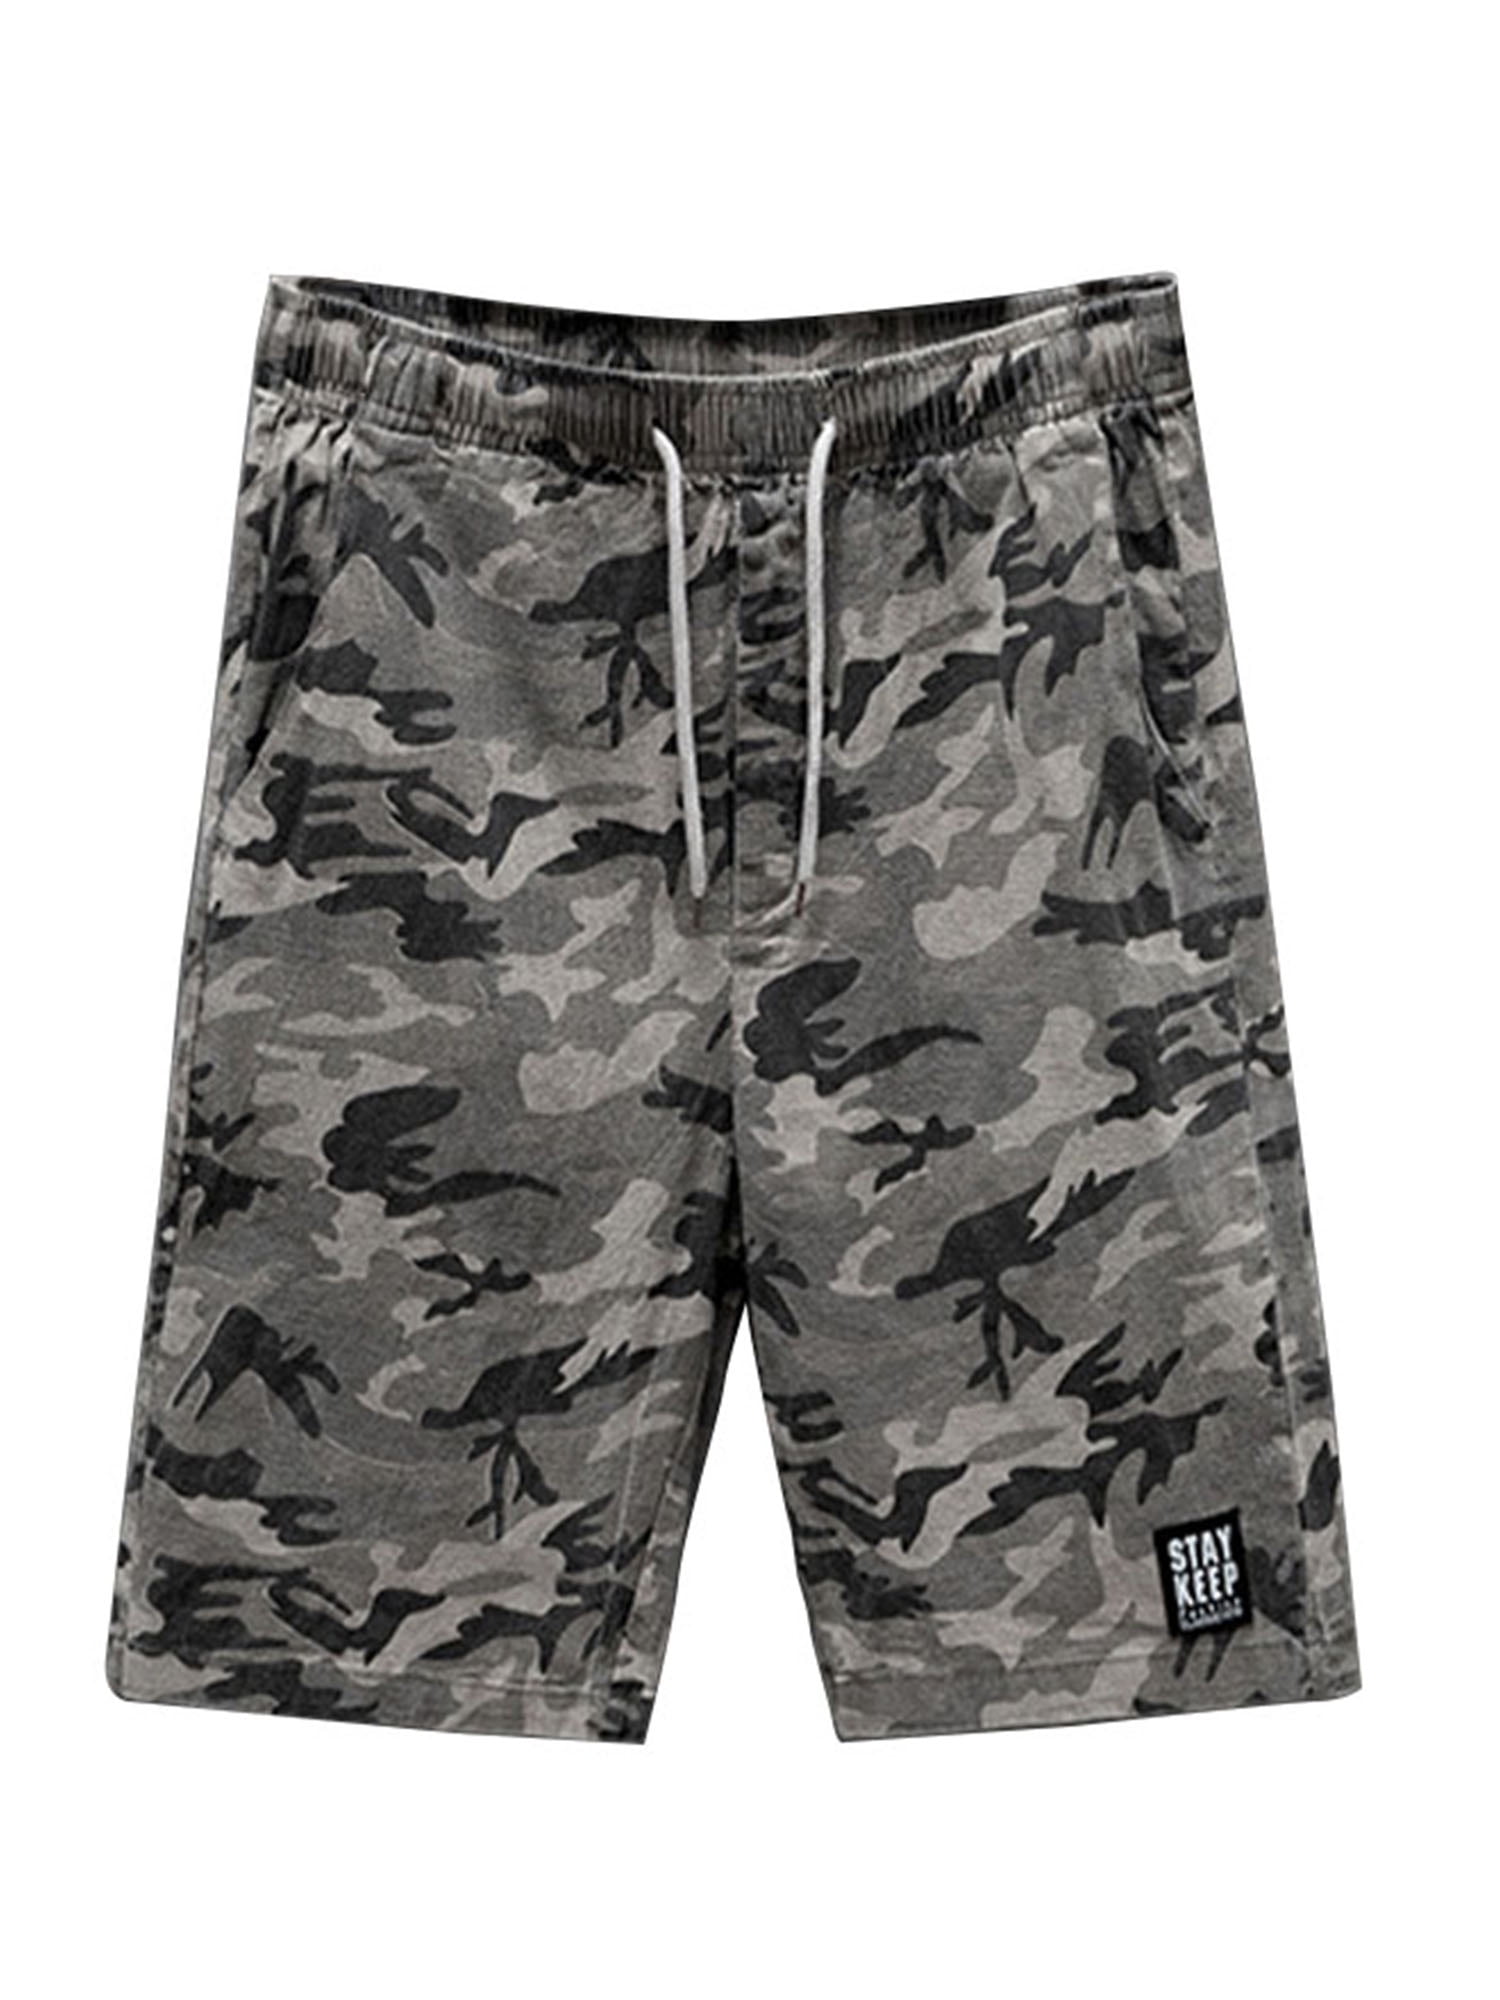 Mens Camo Military Combat Cargo Shorts Pants Sports Work Outdoor Short Bottoms 